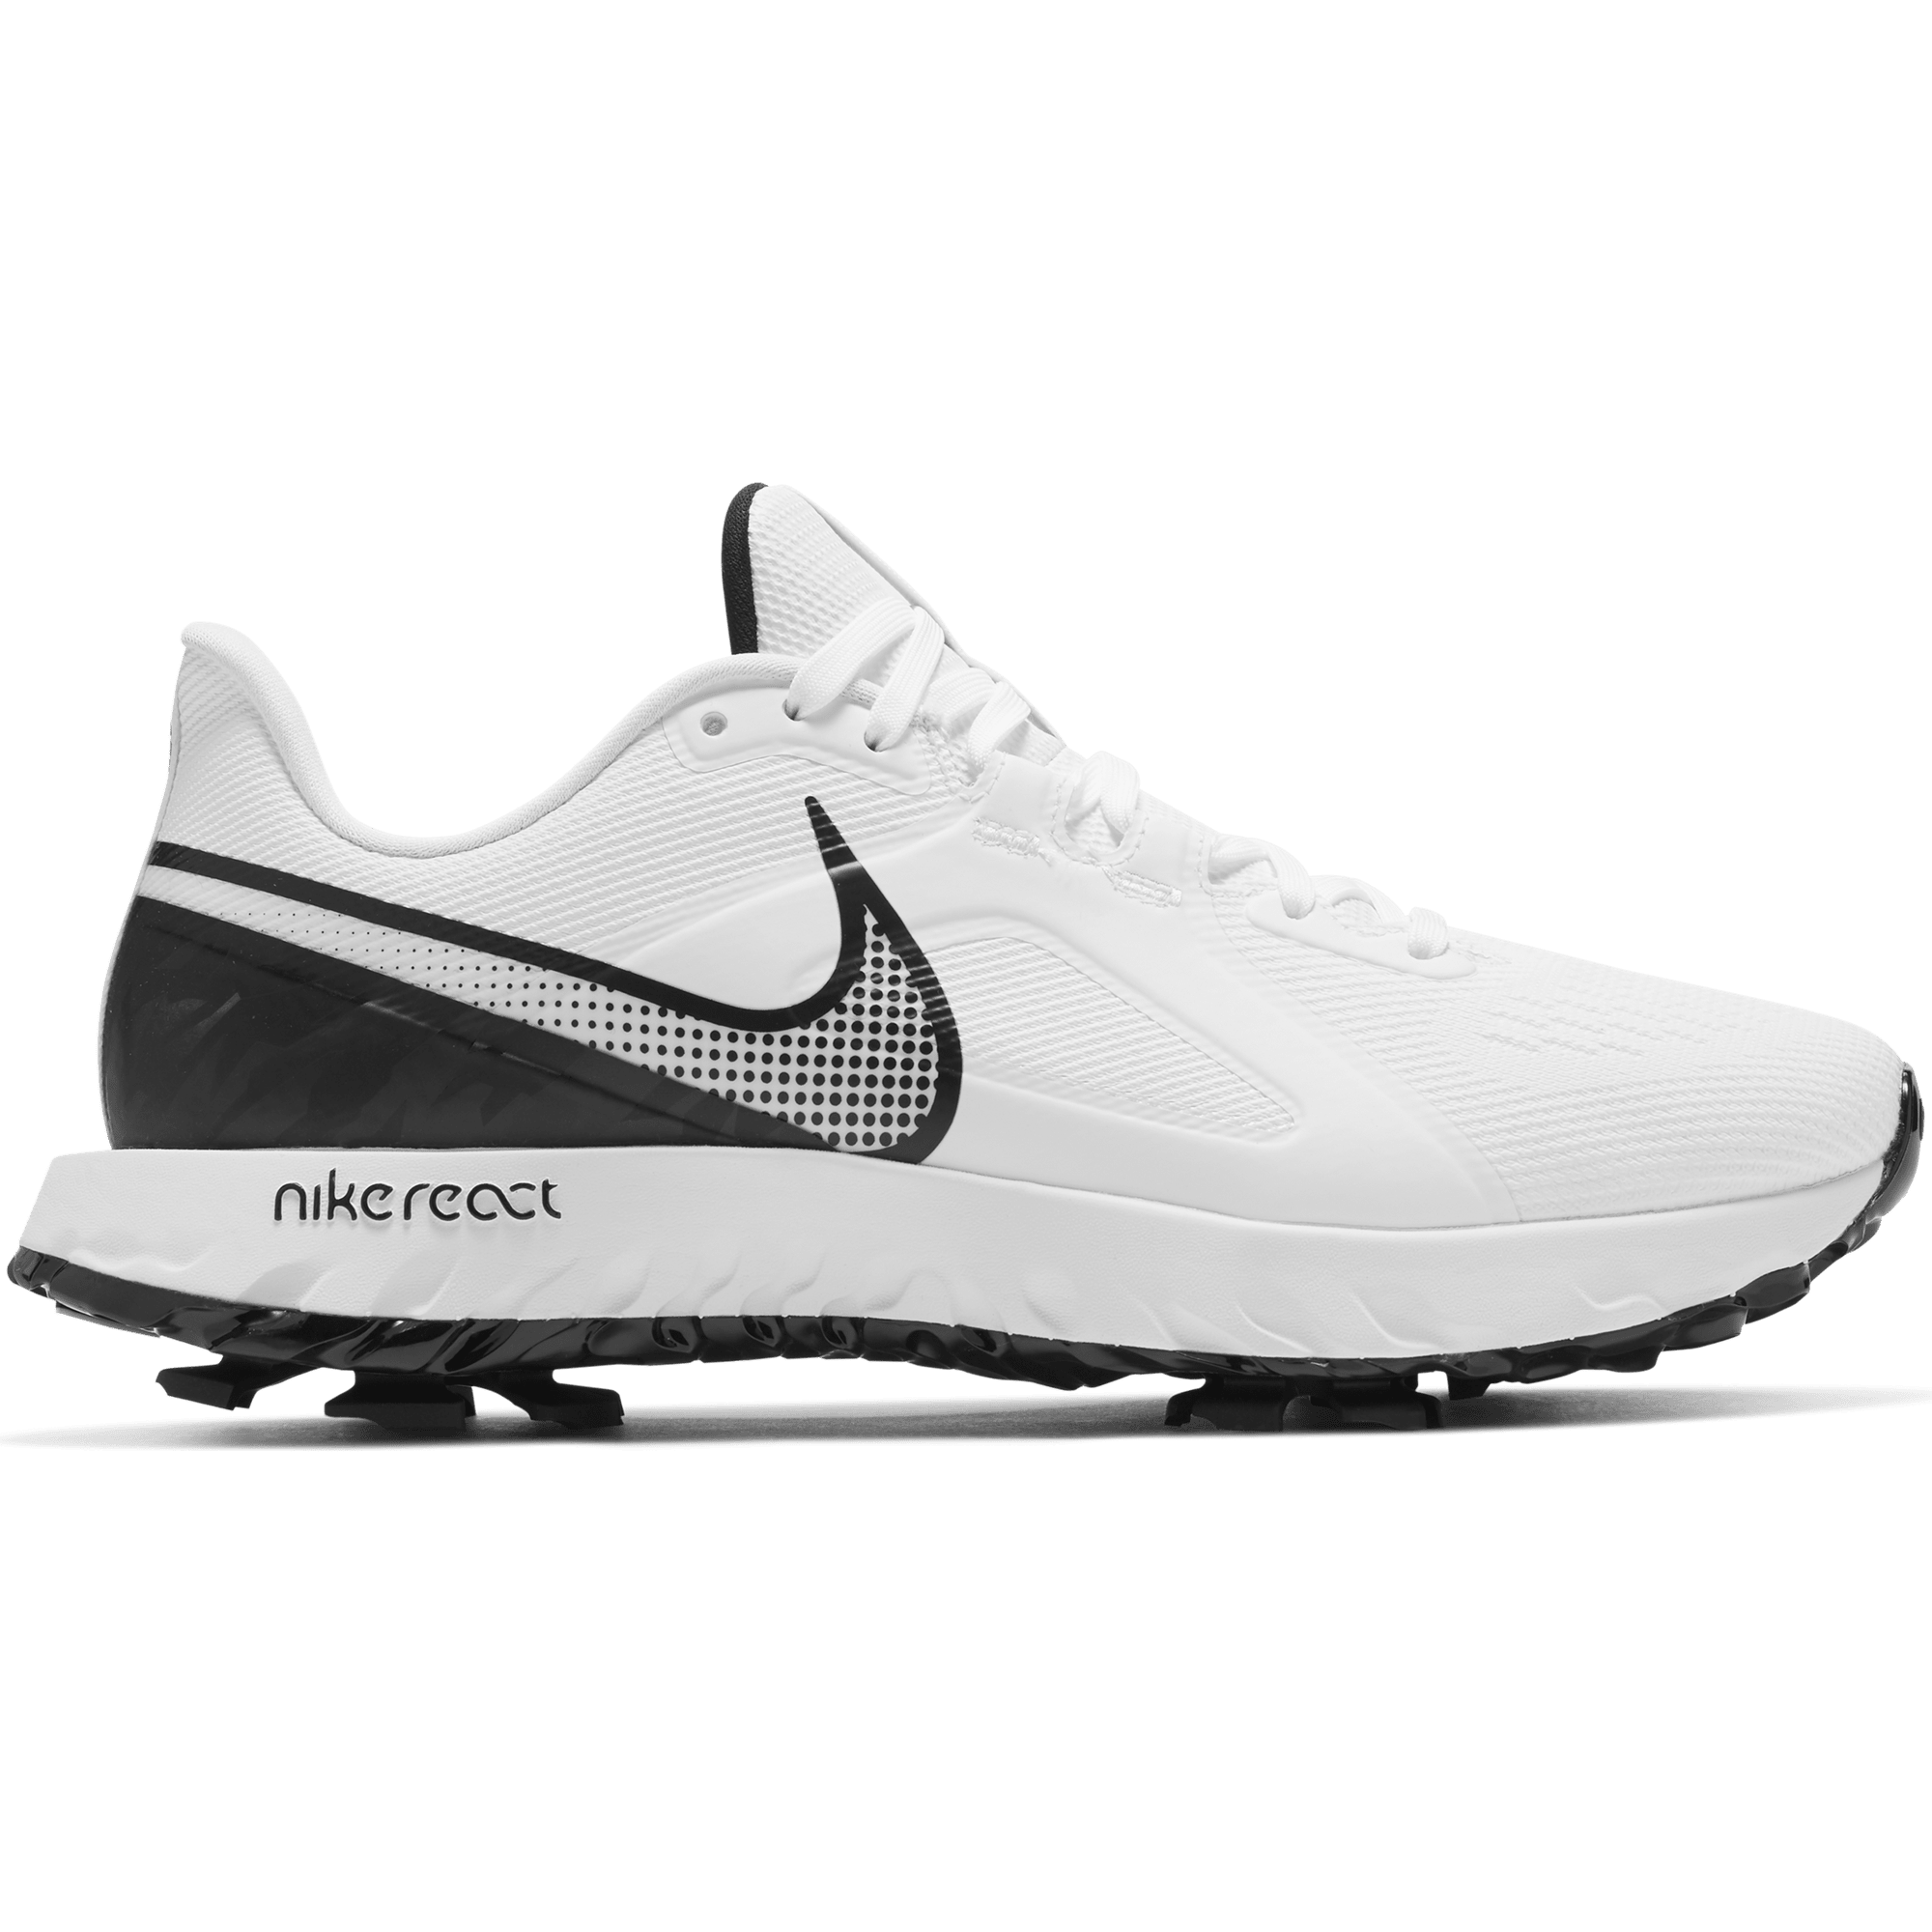 Nike React Infinity Pro Men's Golf Shoe 